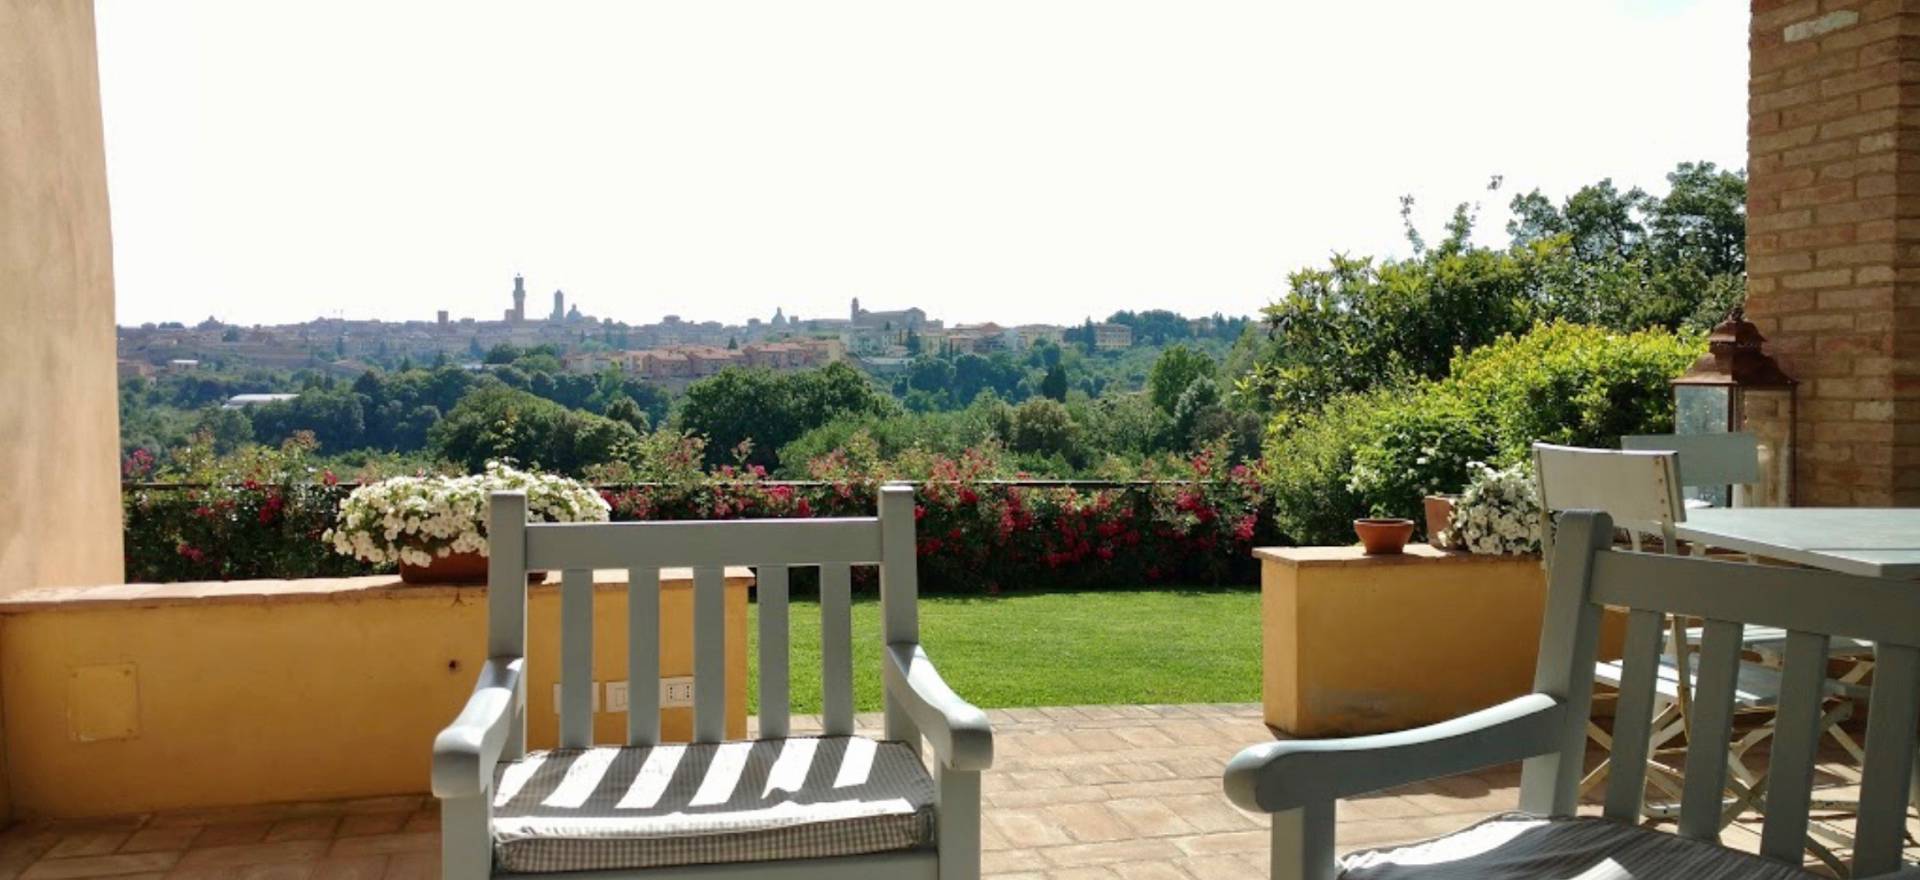 Agriturismo Toscana Agriturismo elegante con bella vista su Siena